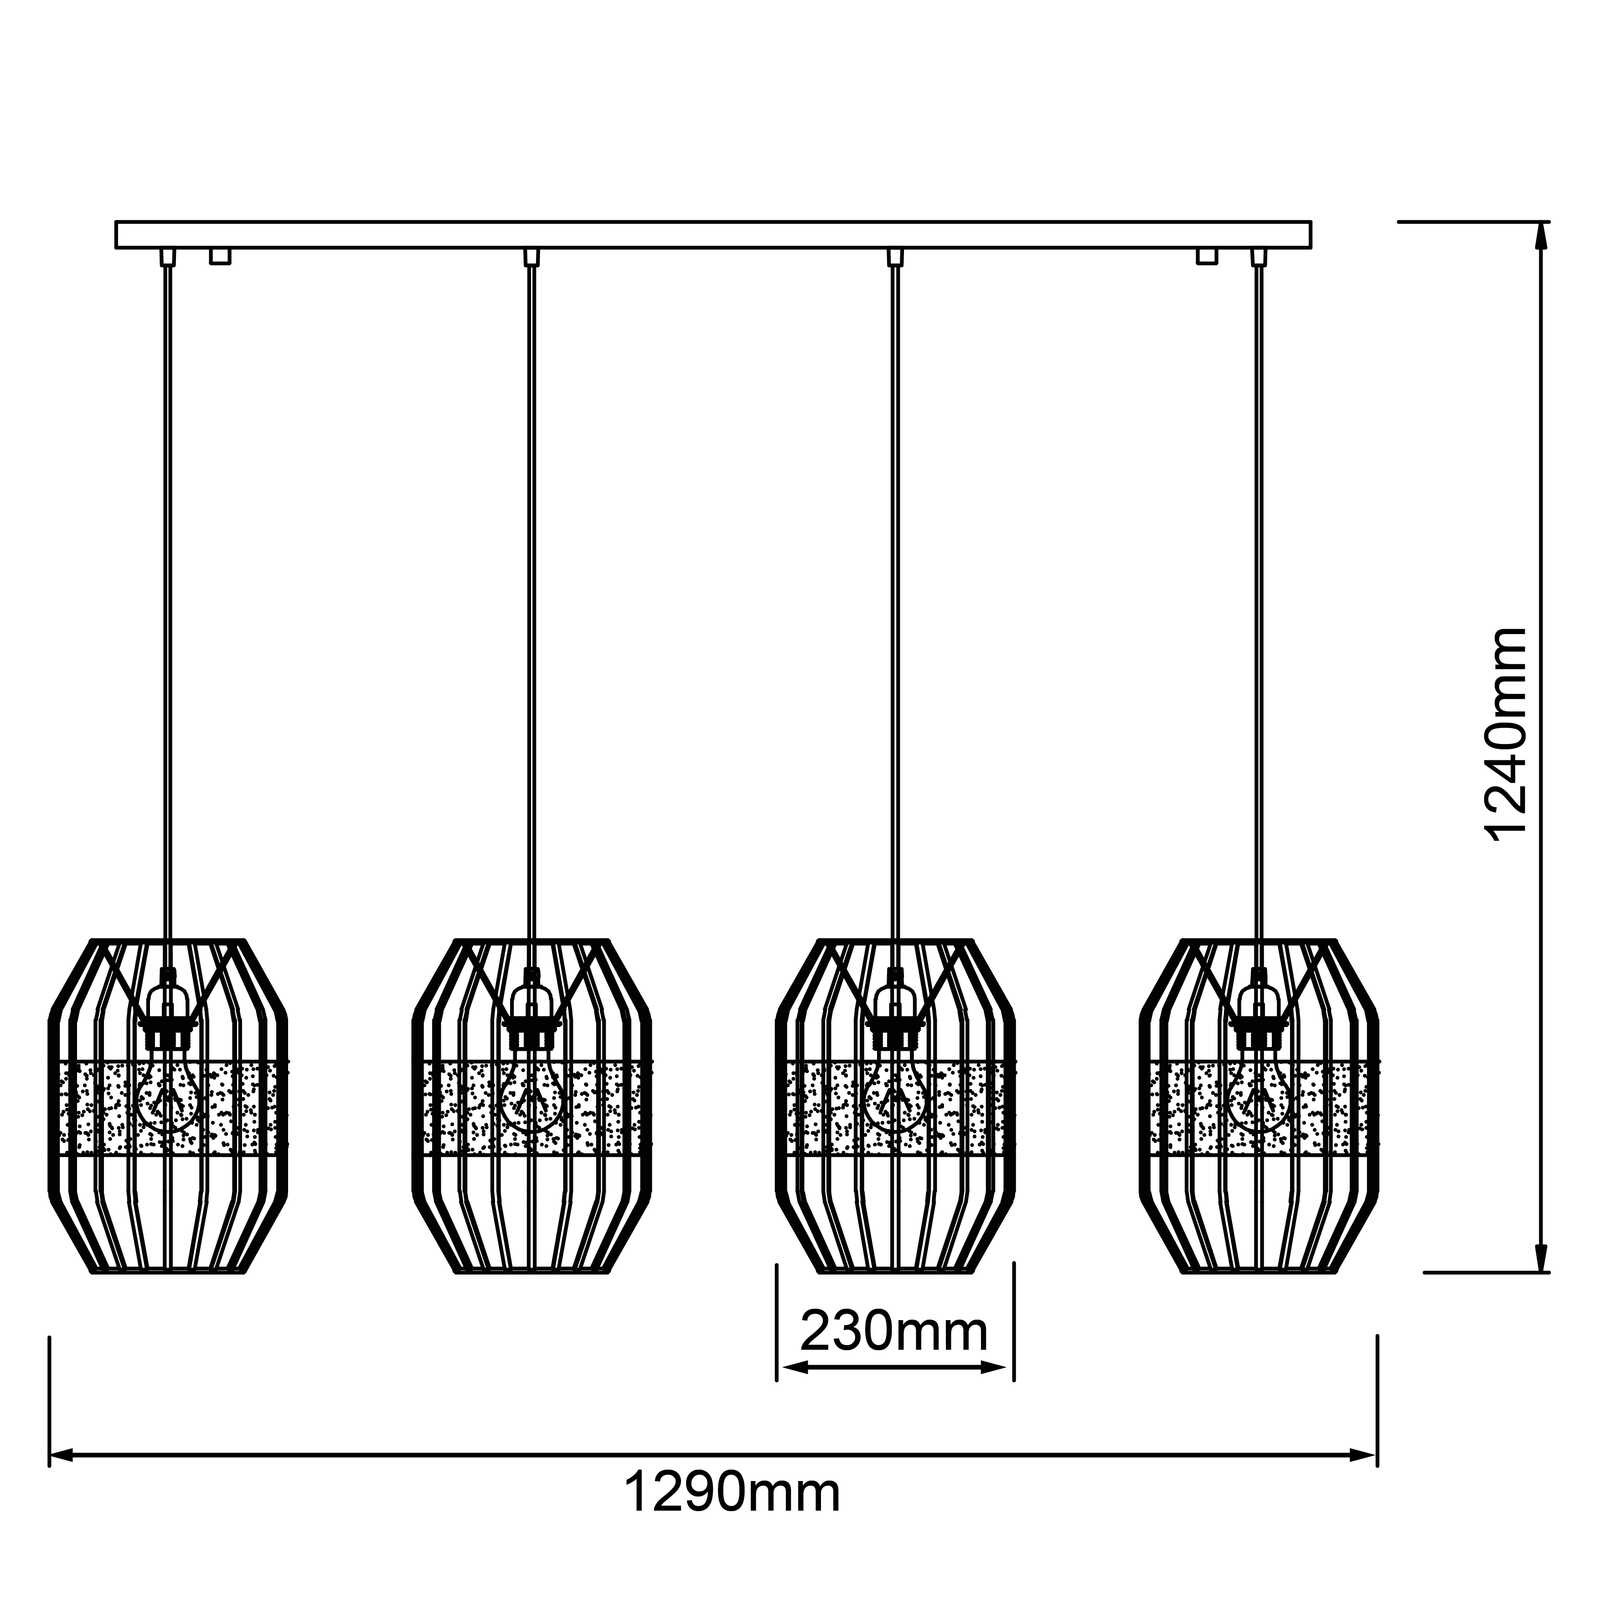             Textiel hanglamp - Nino 2 - Bruin
        